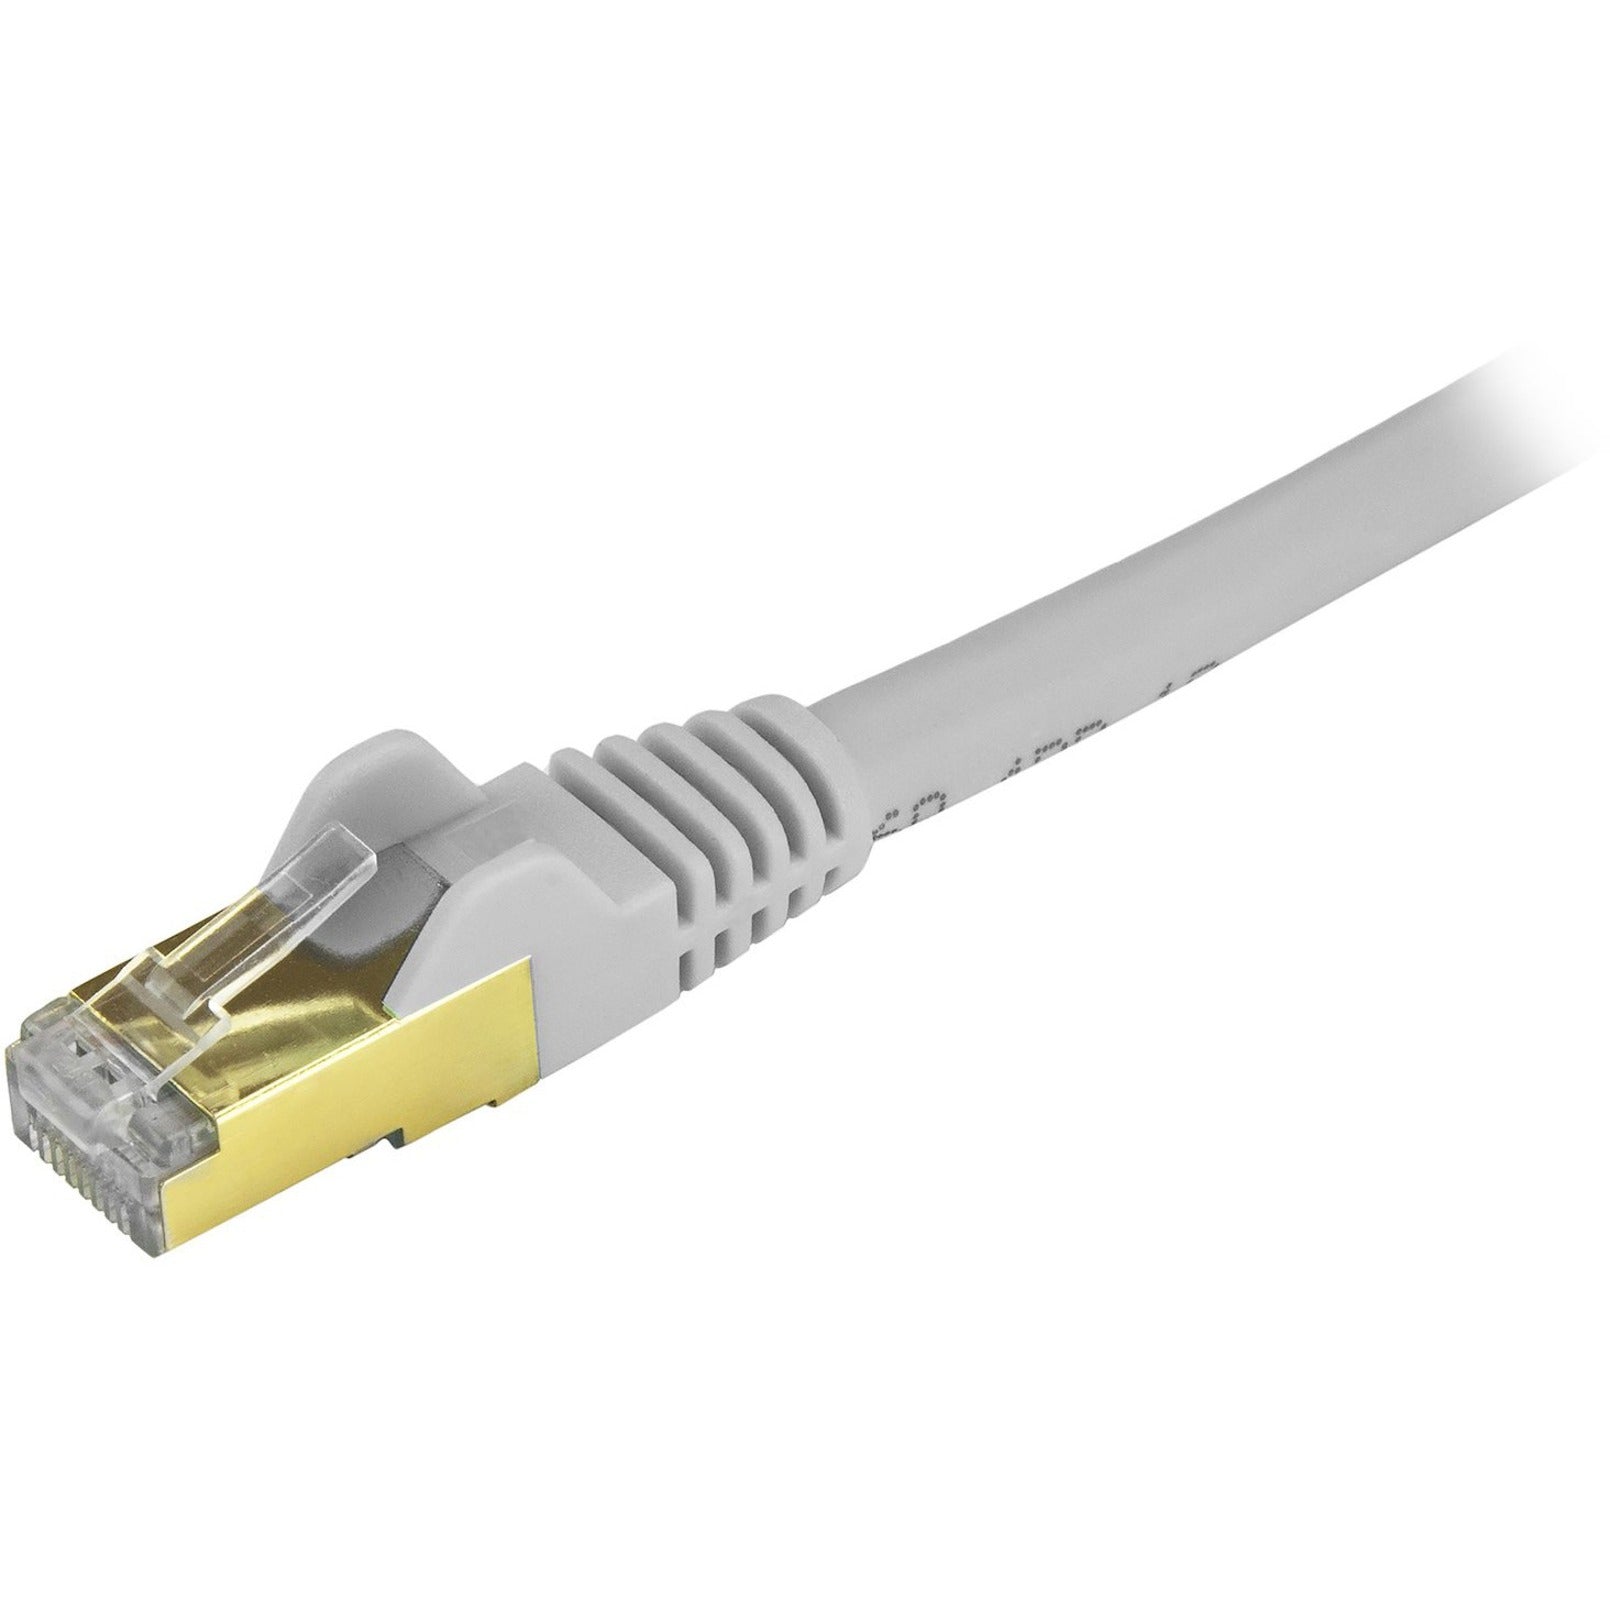 StarTech.com C6ASPAT4GR Cat6a Ethernet Patch Cable - Shielded (STP) - 4 ft., Gray, Snagless RJ45 Ethernet Cord